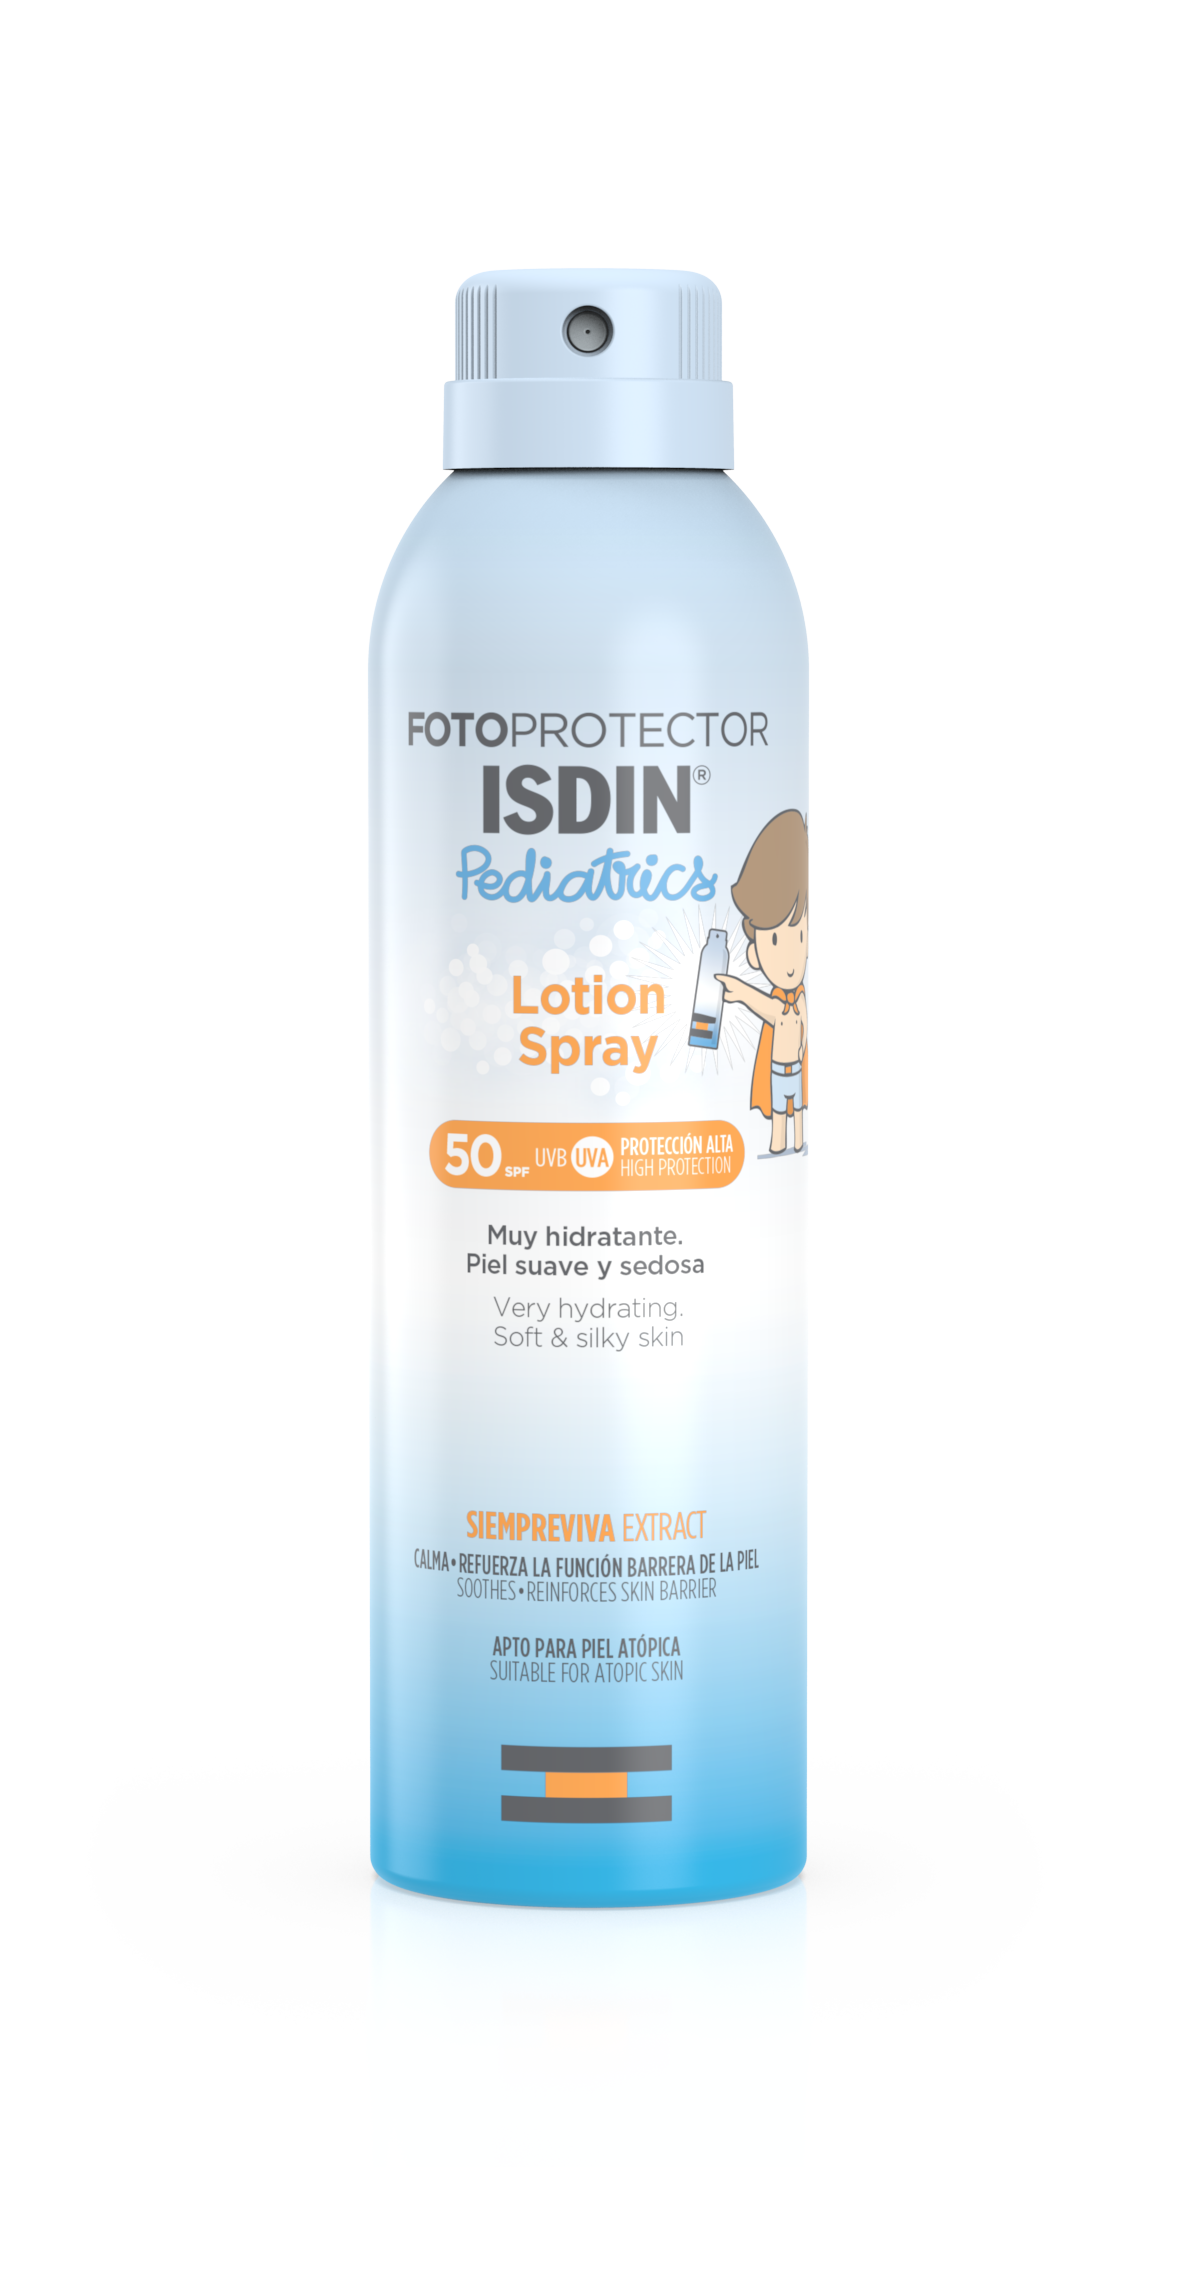 Fotoprotector ISDIN Pediatrics Lotion Spray 2021